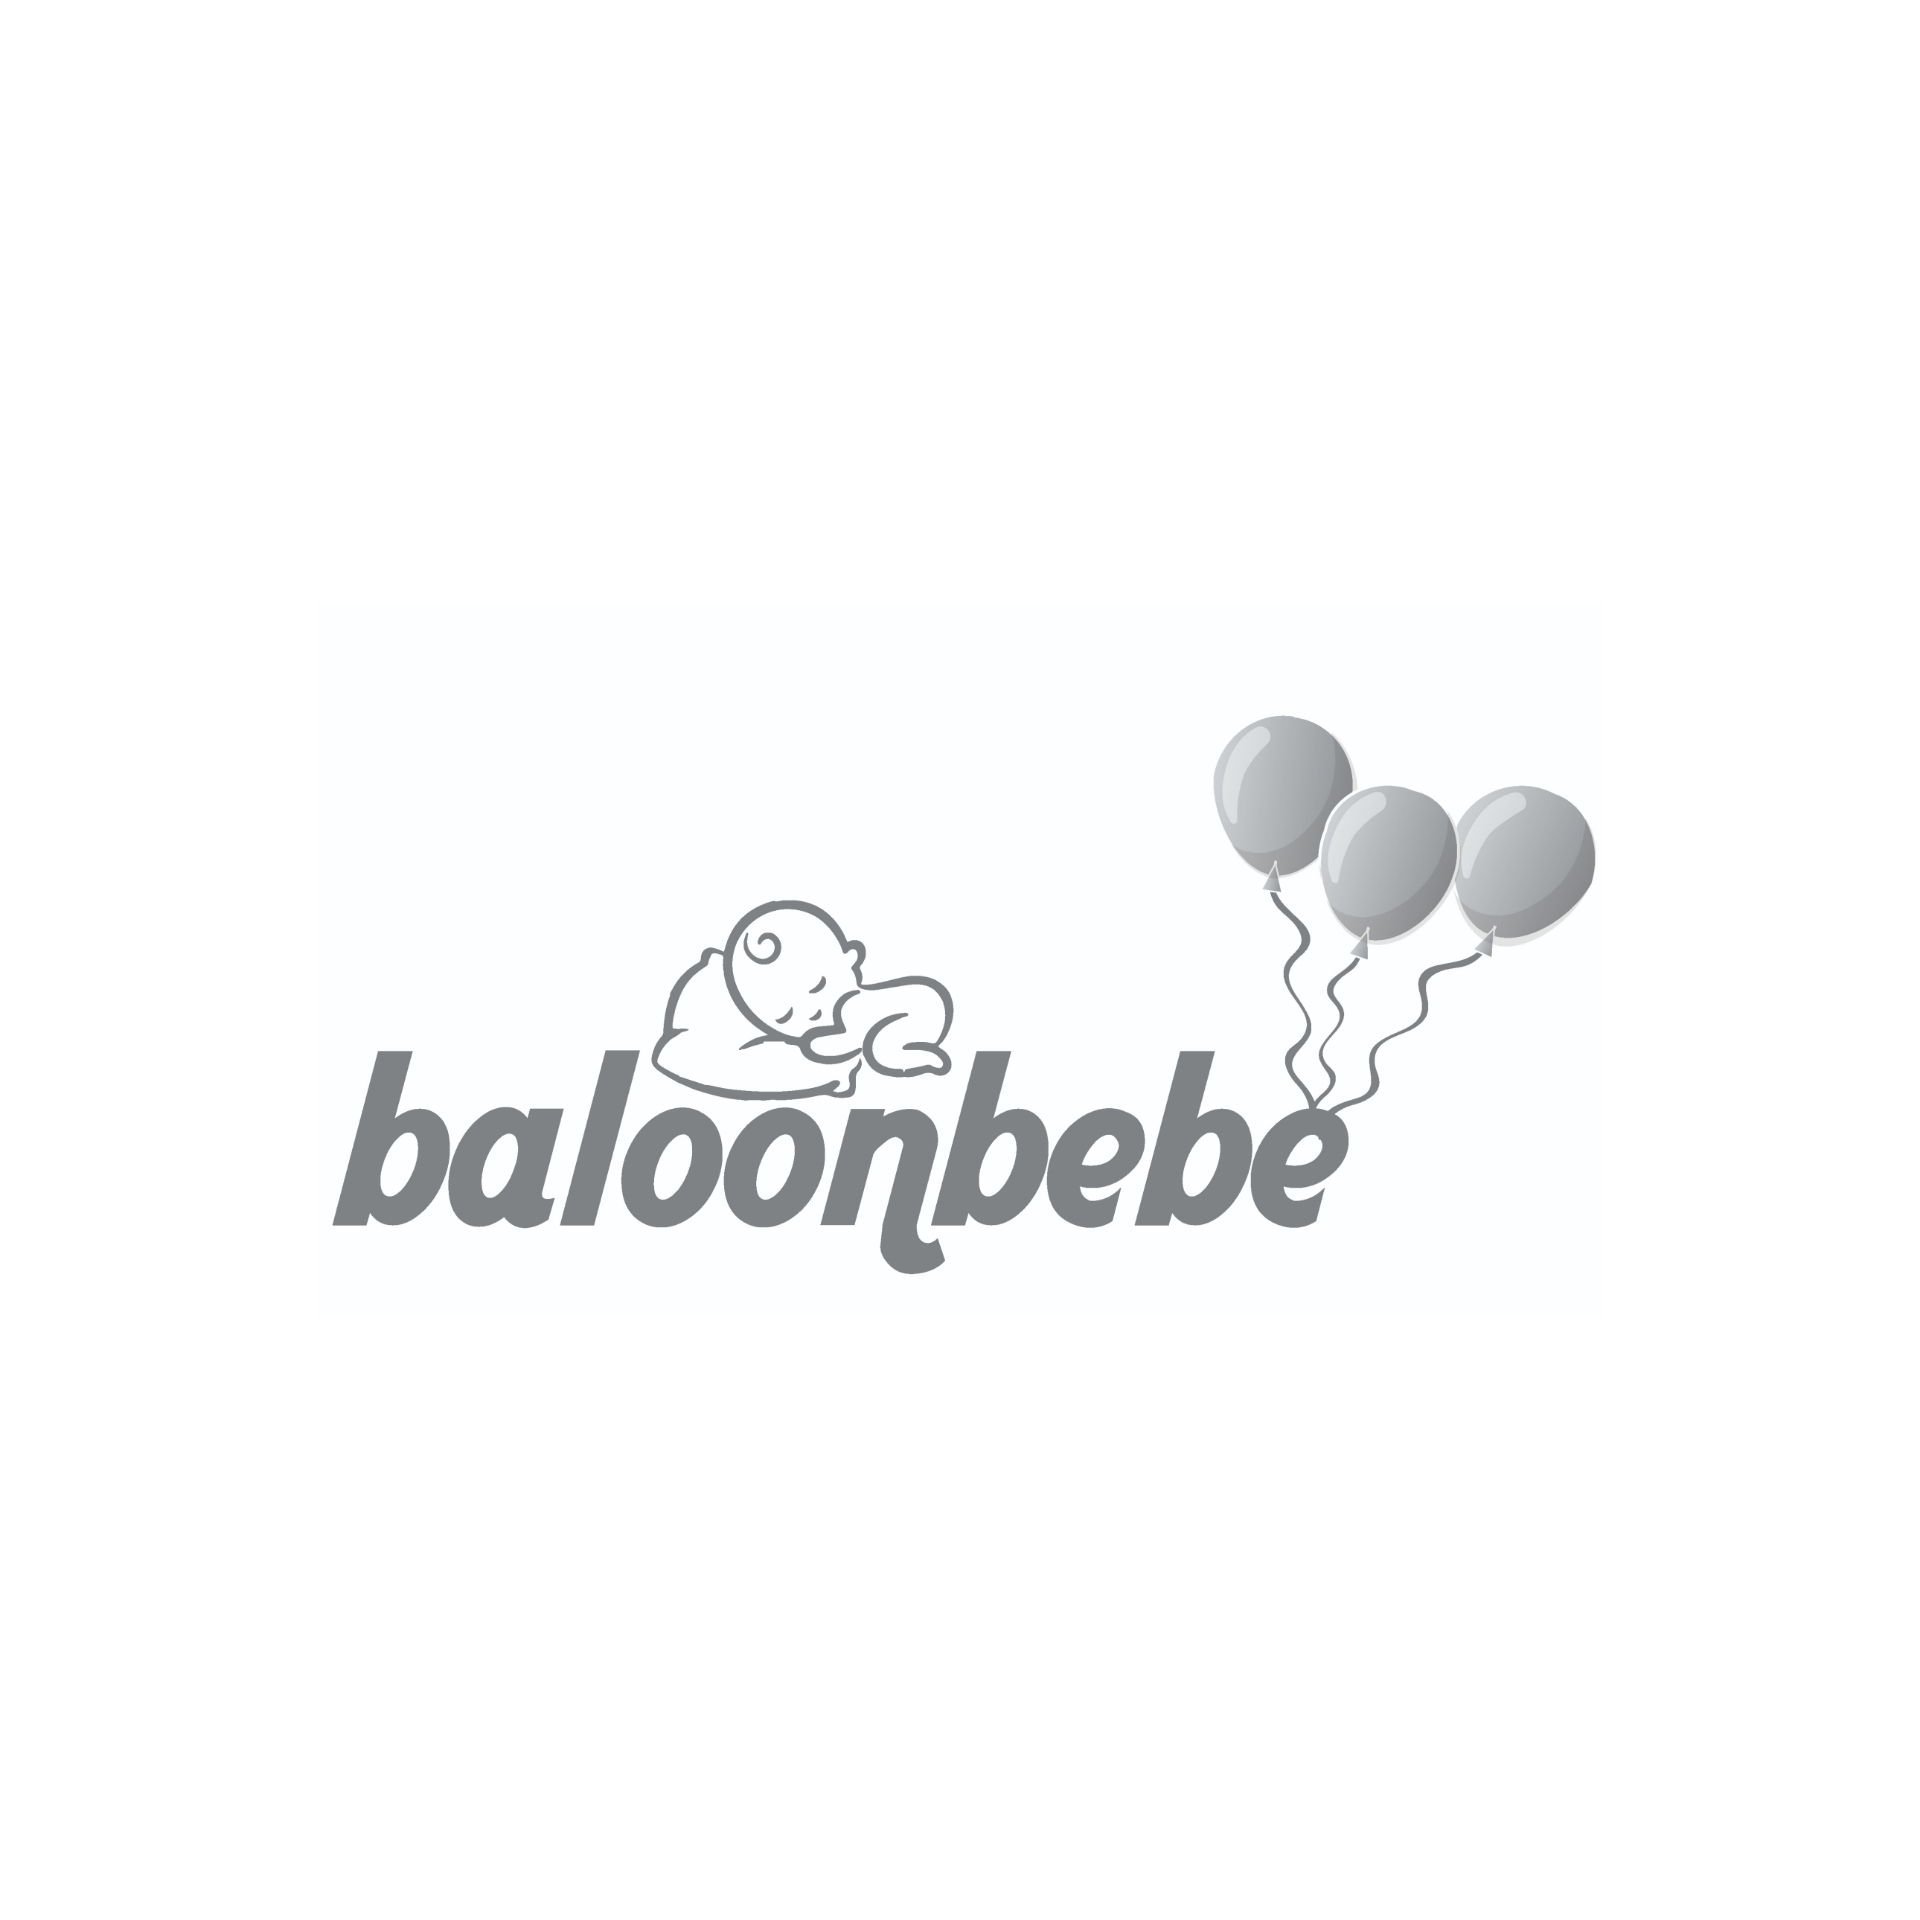 baloonbebe